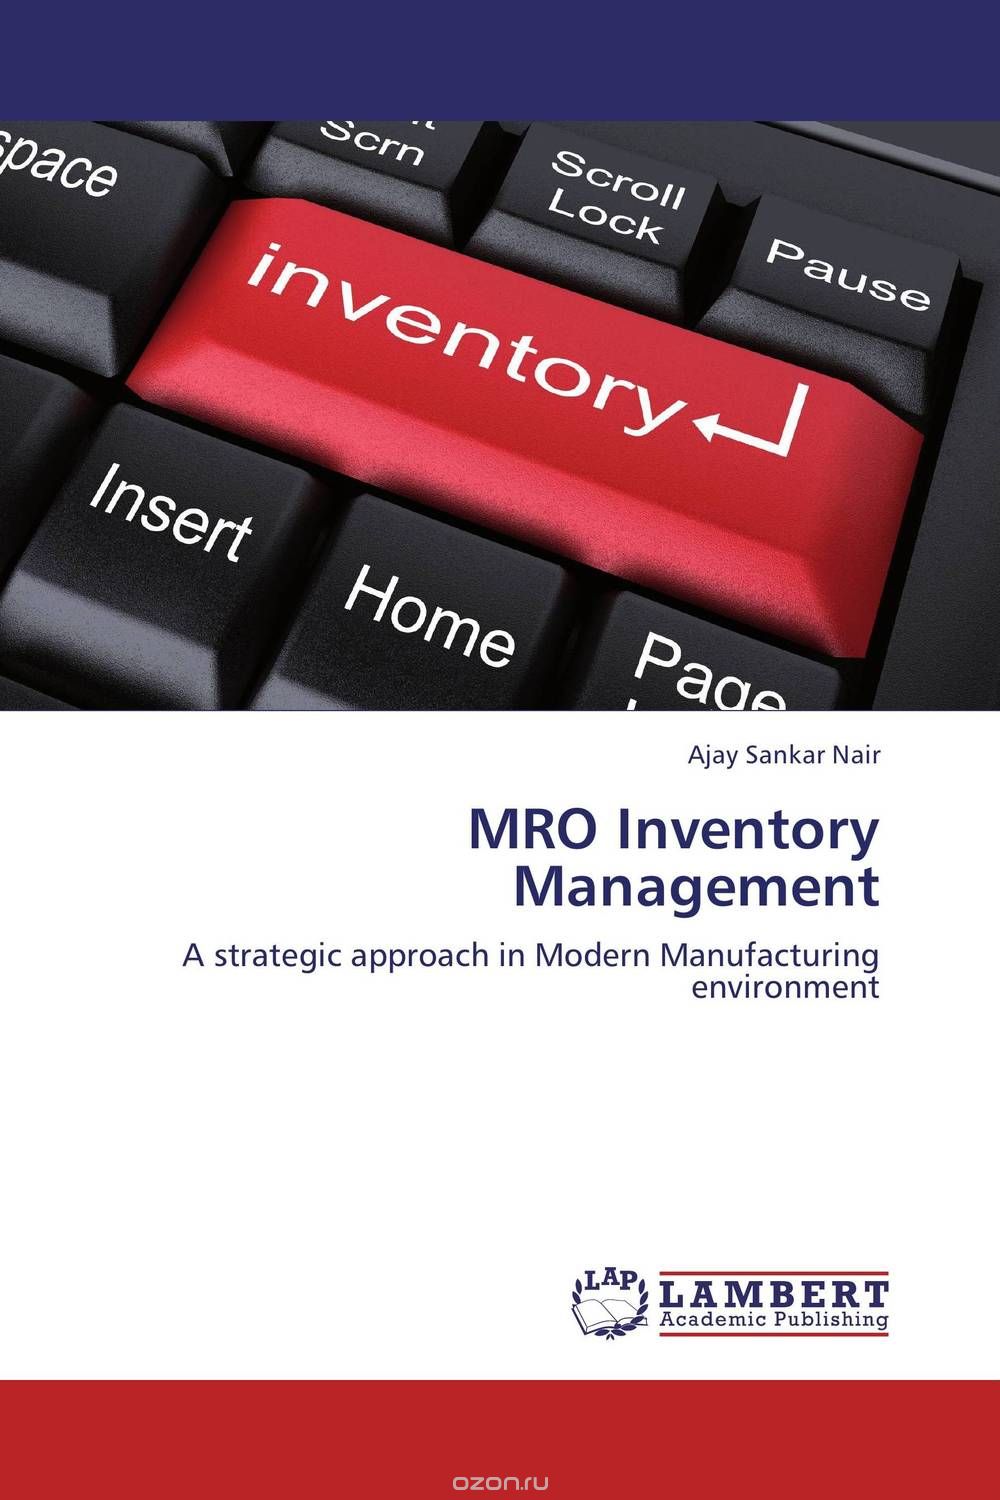 Скачать книгу "MRO Inventory Management"